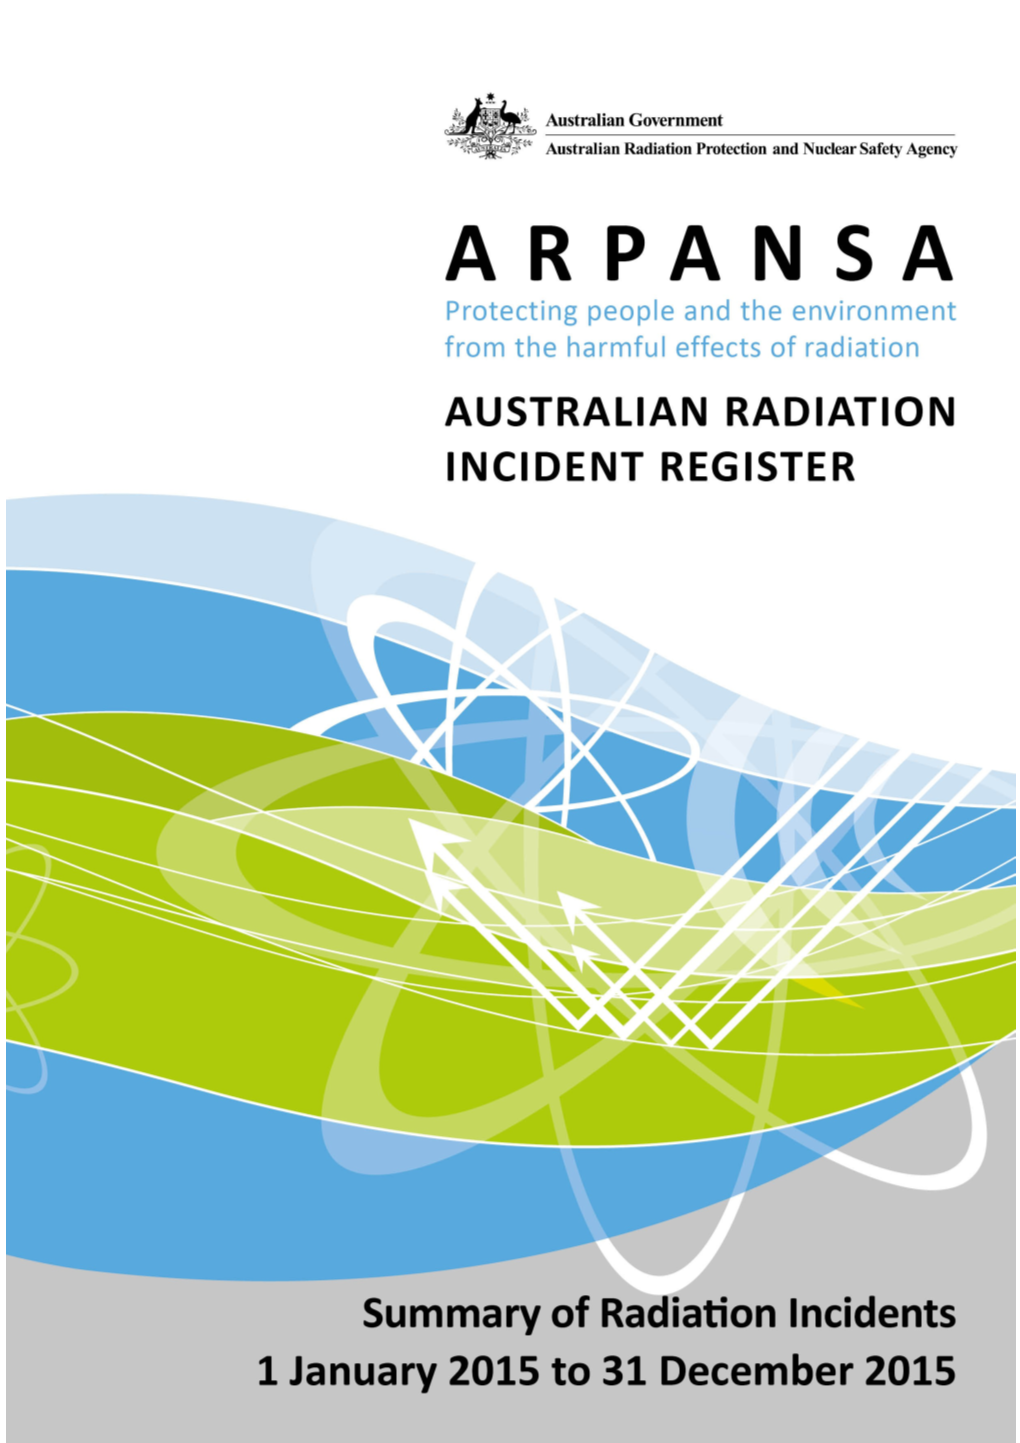 Summary of Radiation Incidents - Australian Radiation Incident Register - 2015